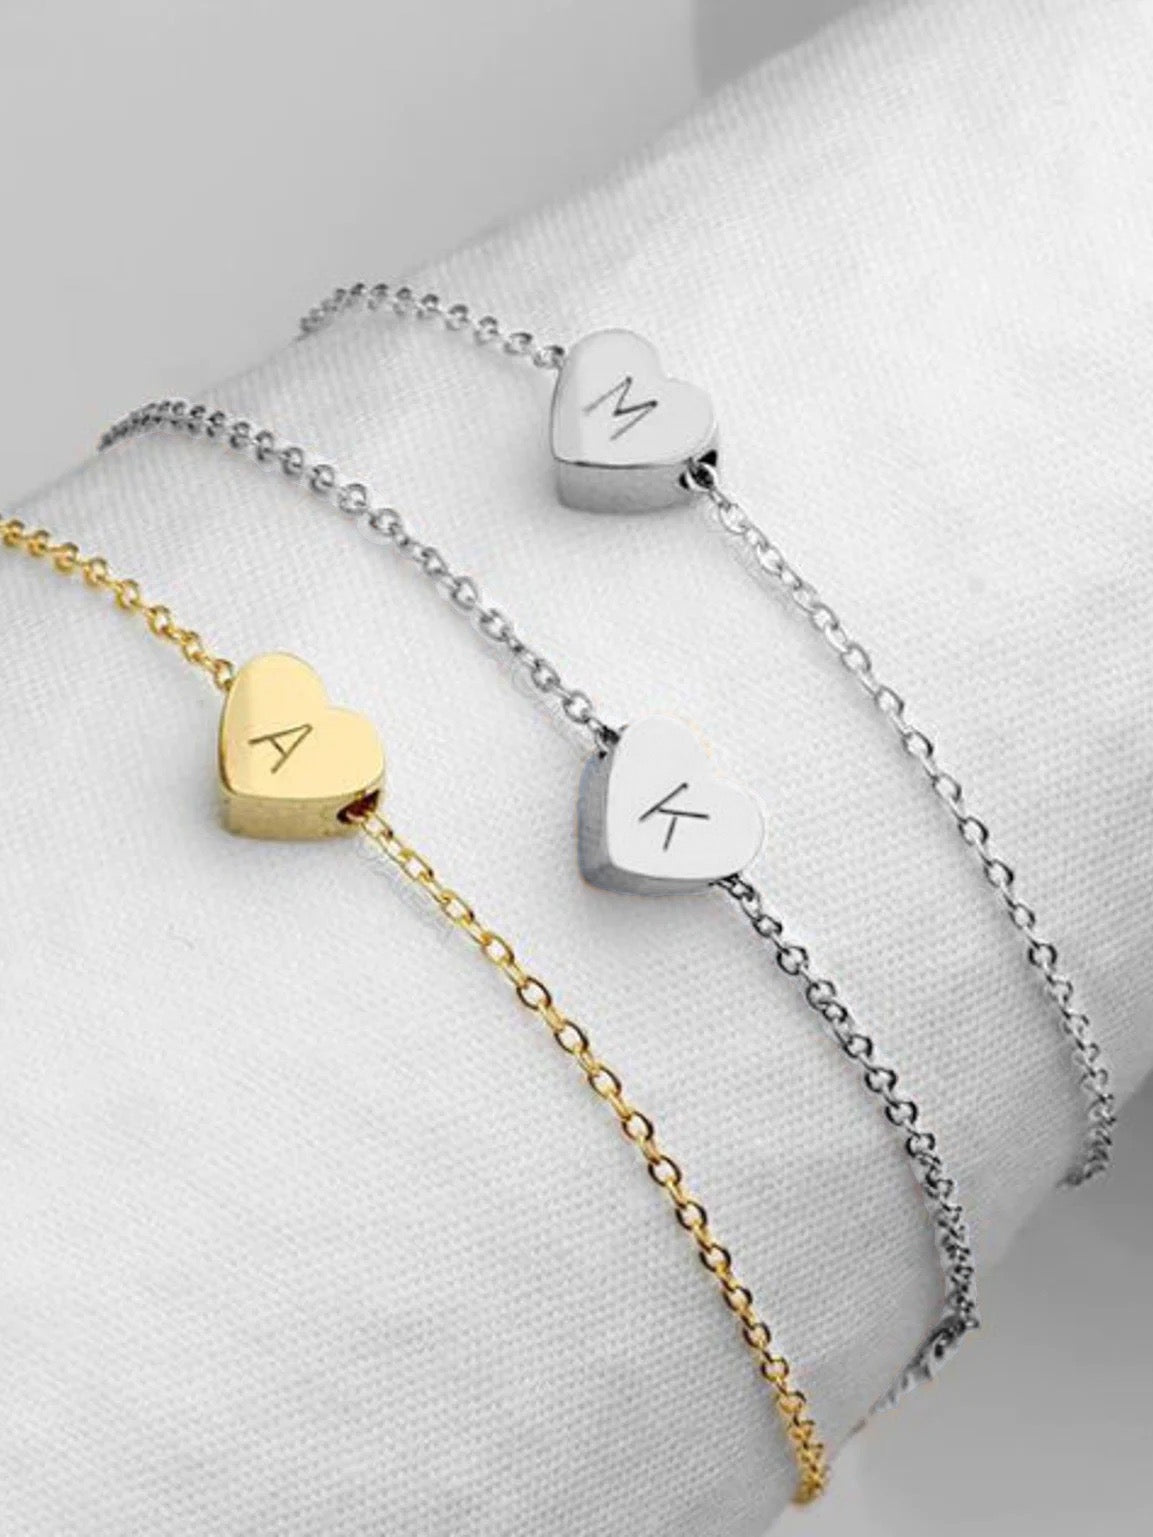 Silver Initials Heart Bracelet 